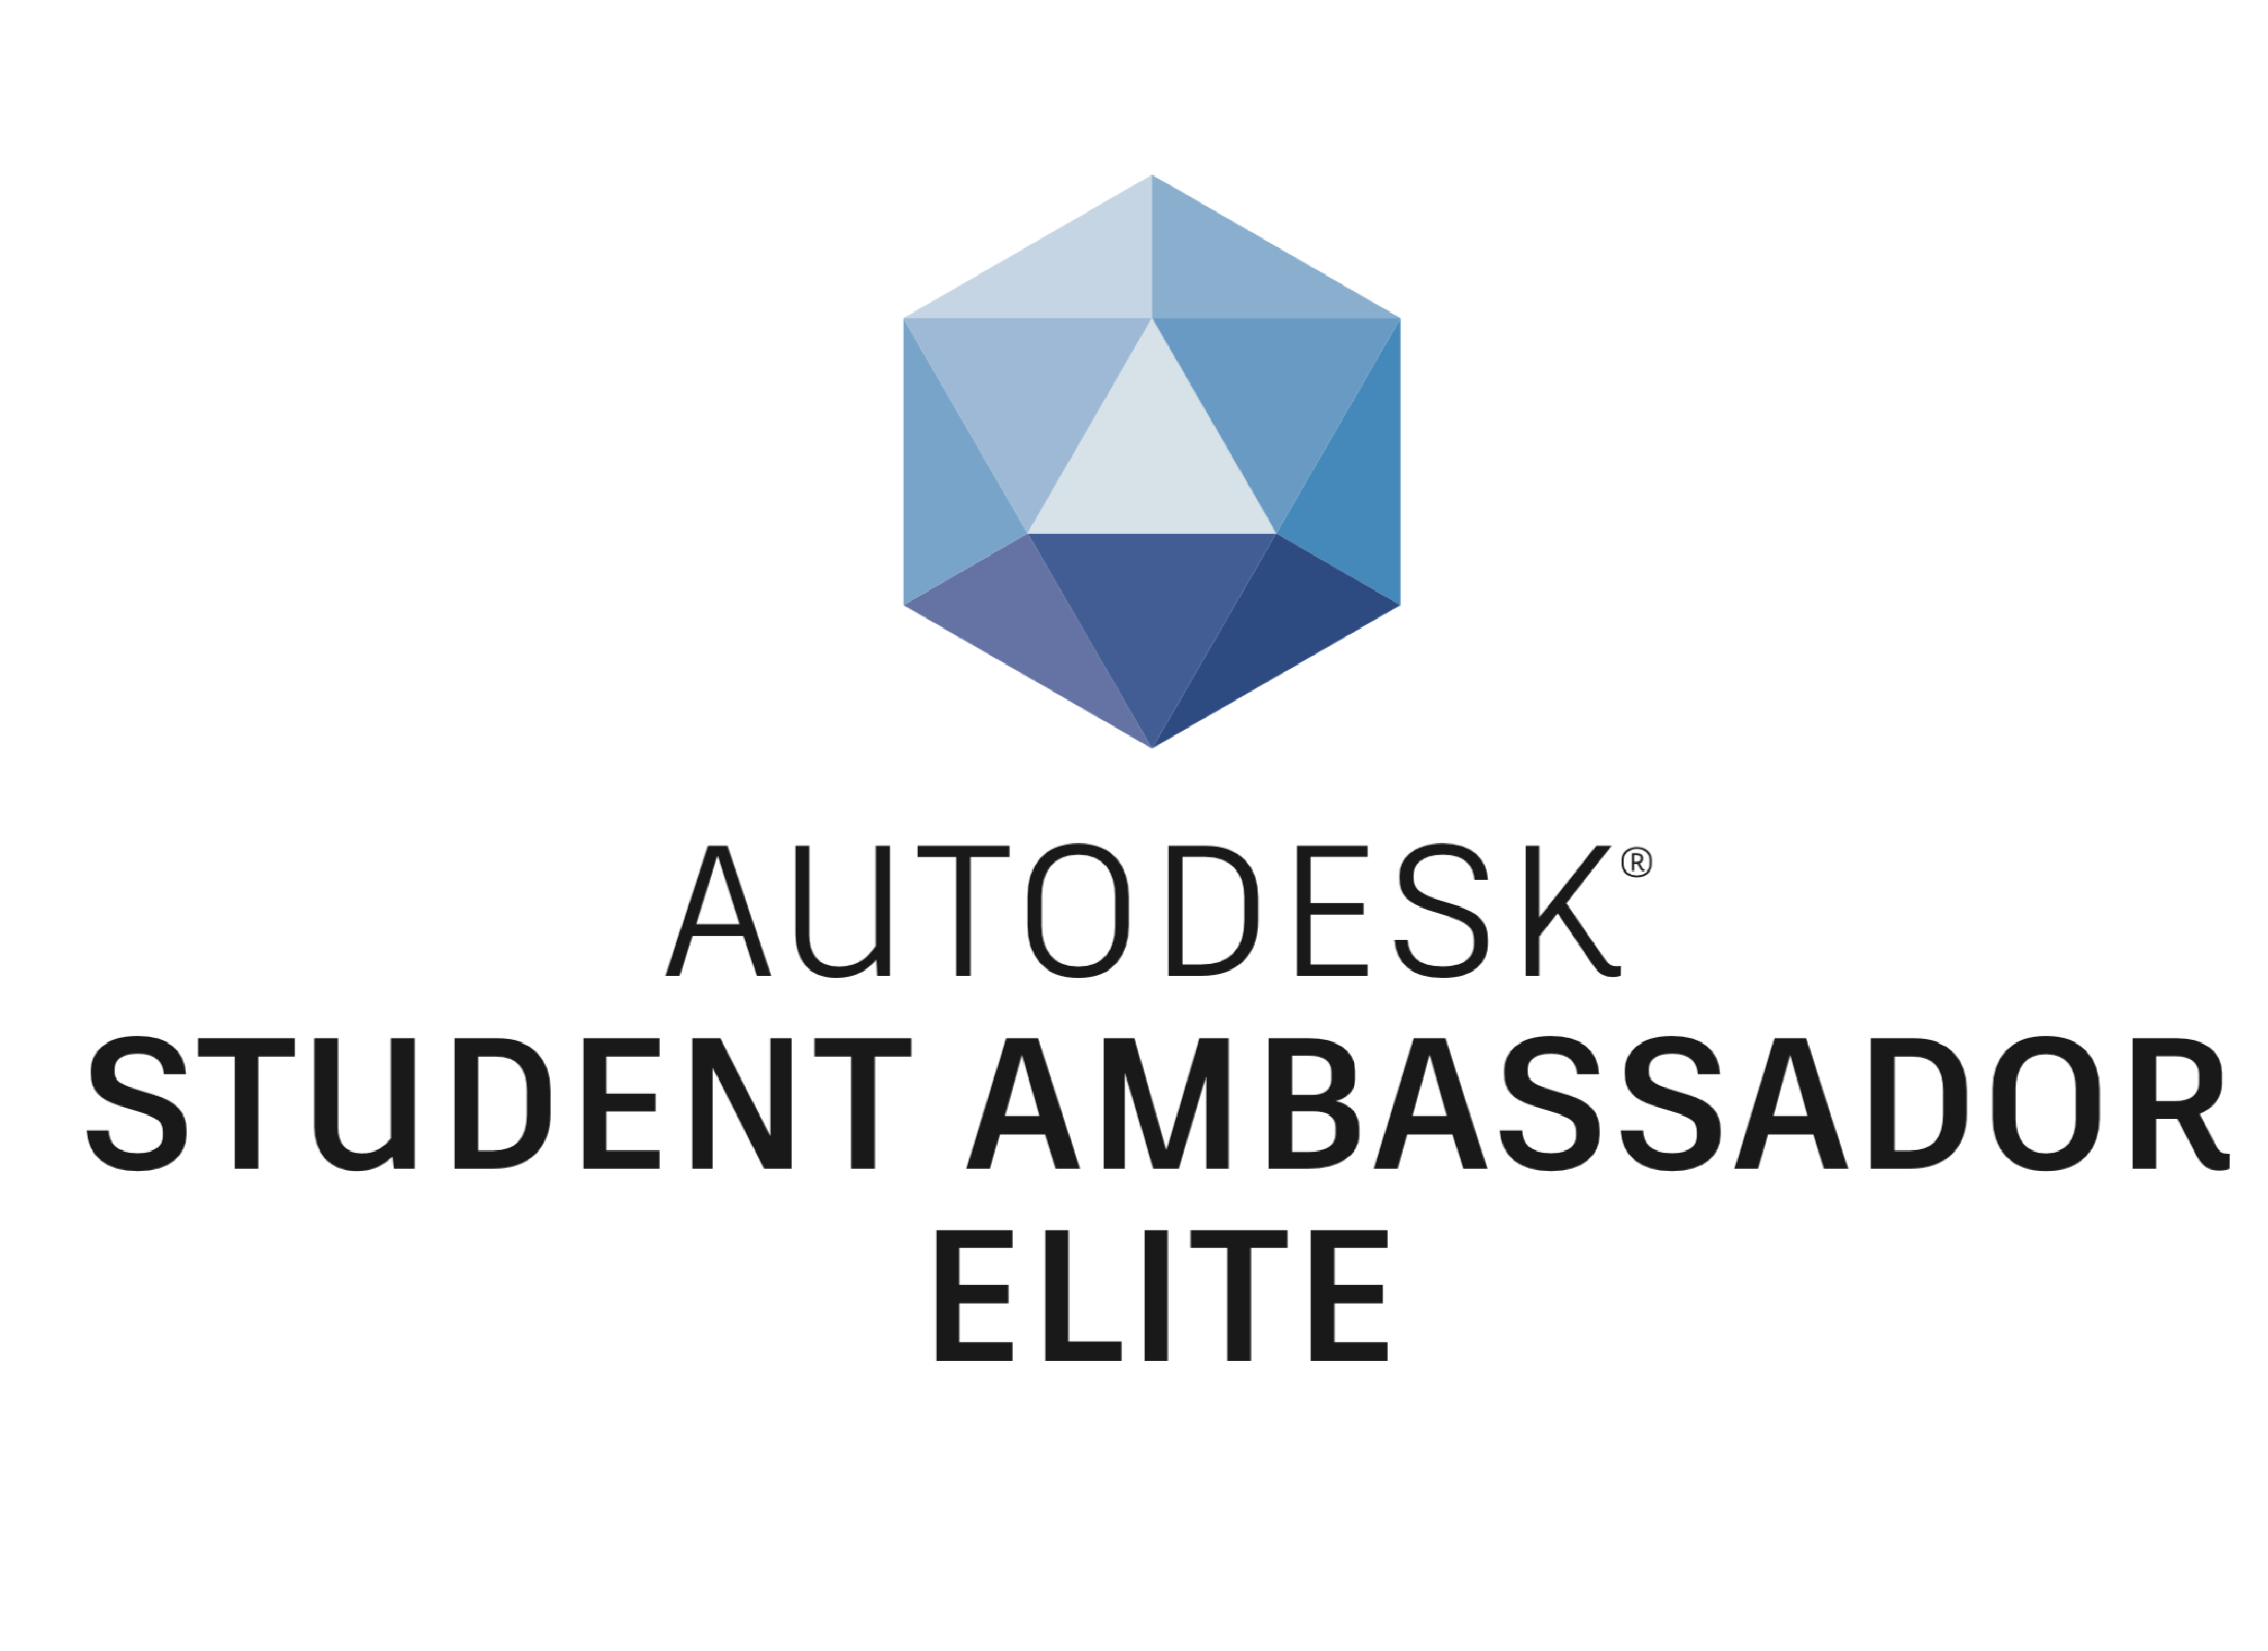 Autodesk Student Ambassador Elite